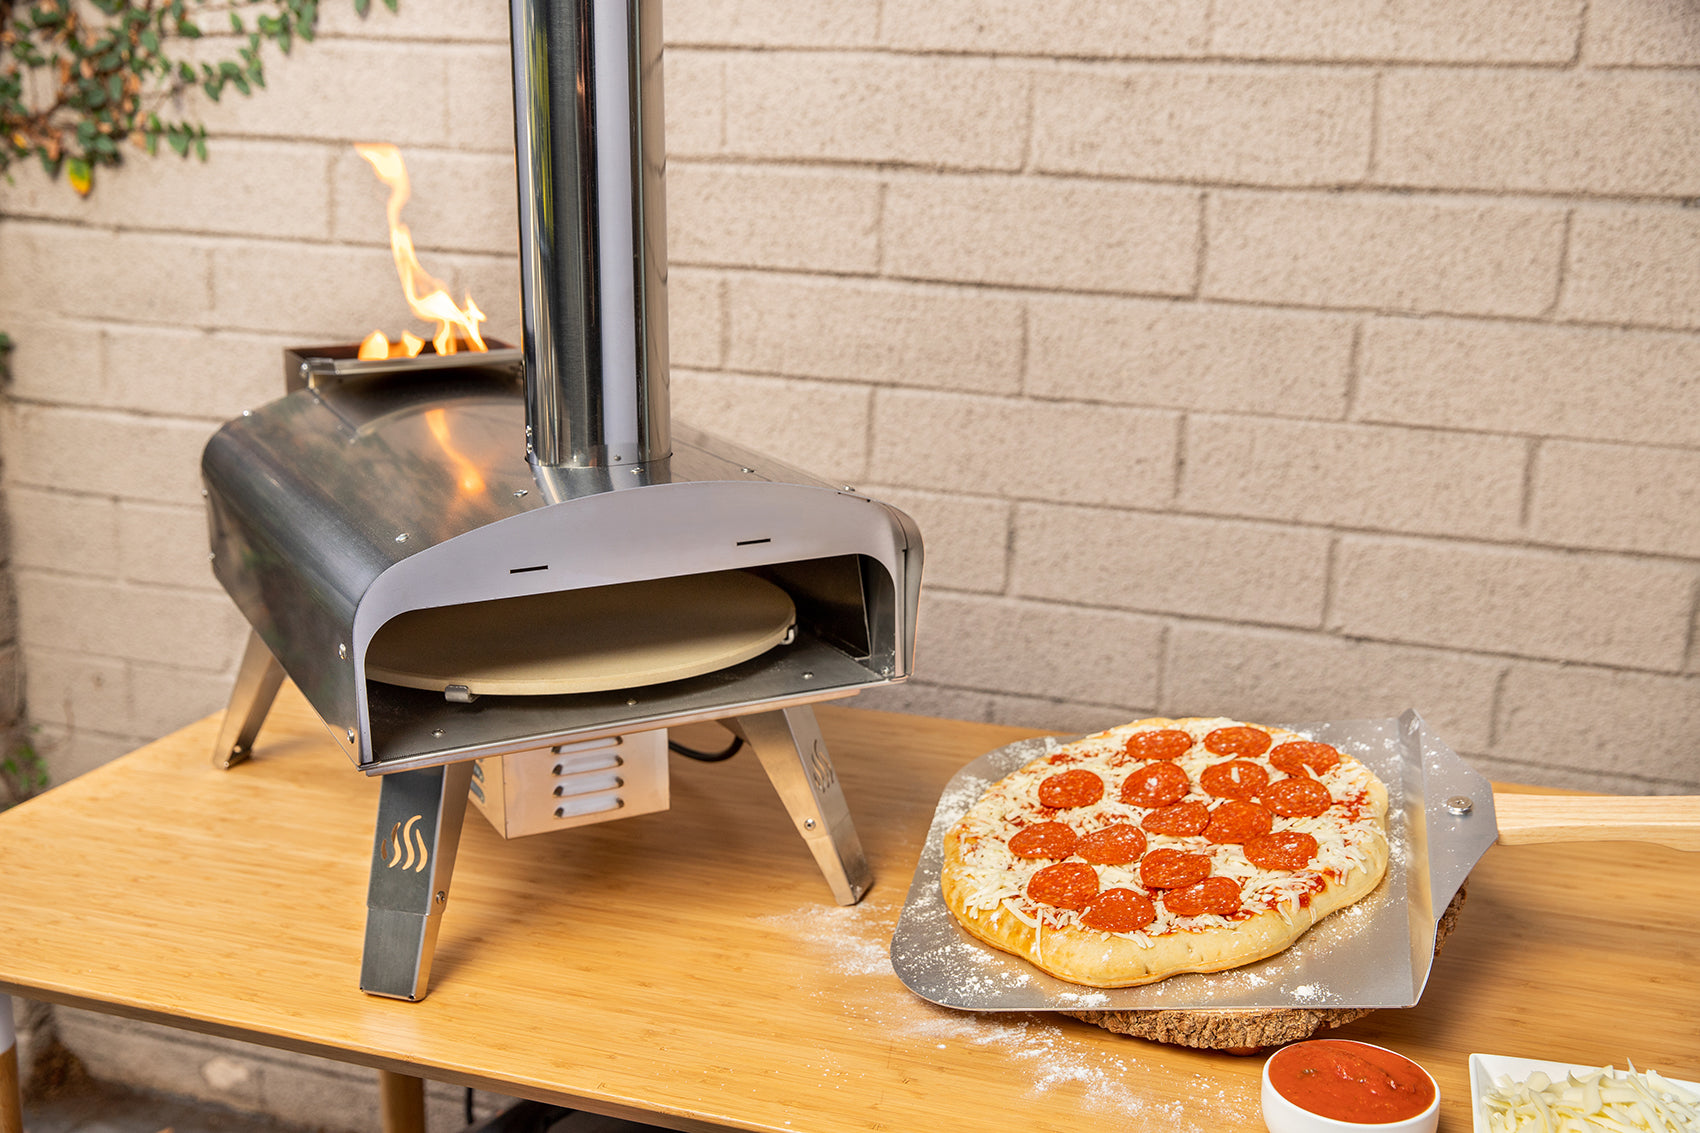 Wood Pellet Pizza Oven